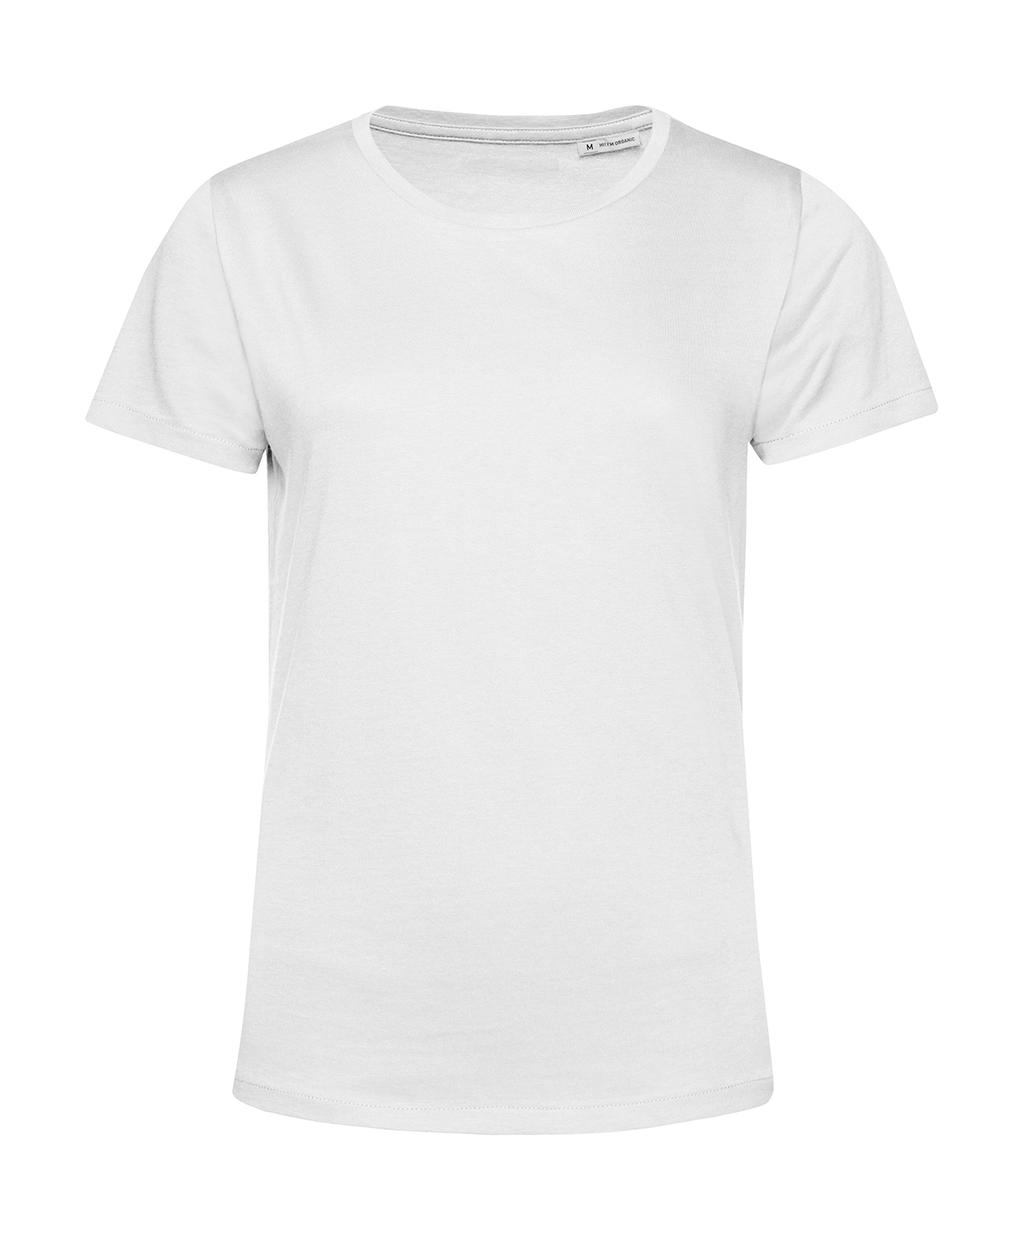 Tričko dámské BC Organic Inspire E150 - bílé, L